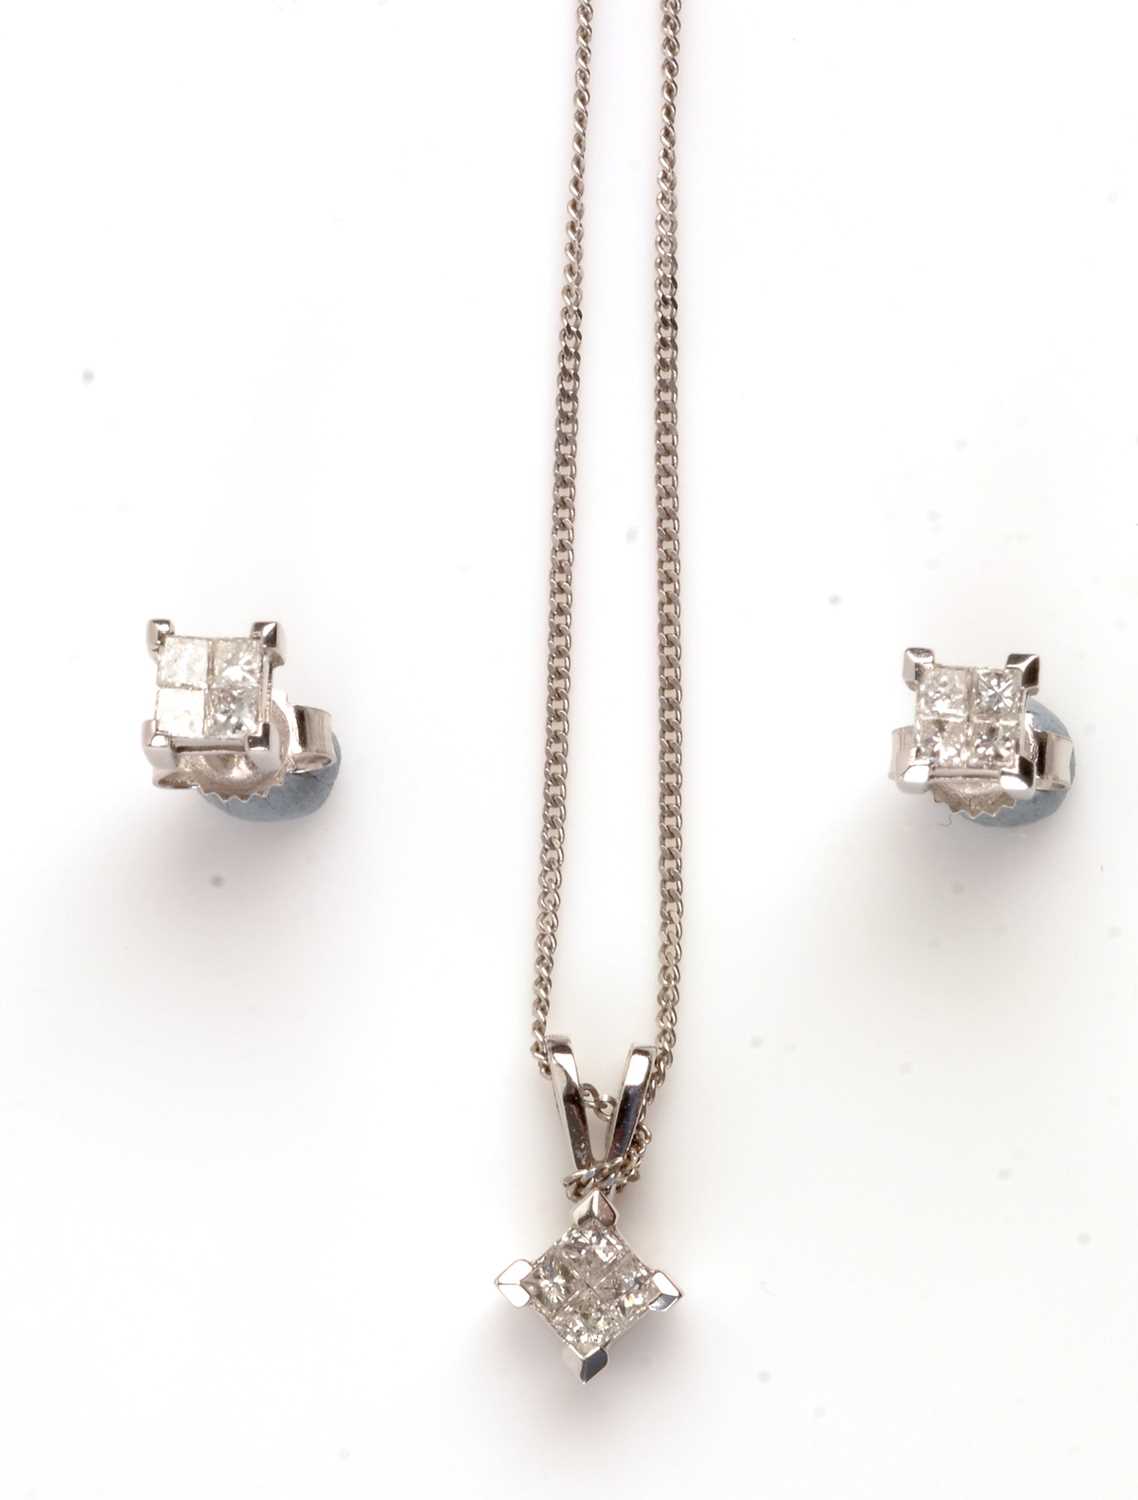 Lot 62 - Diamond pendant and earrings